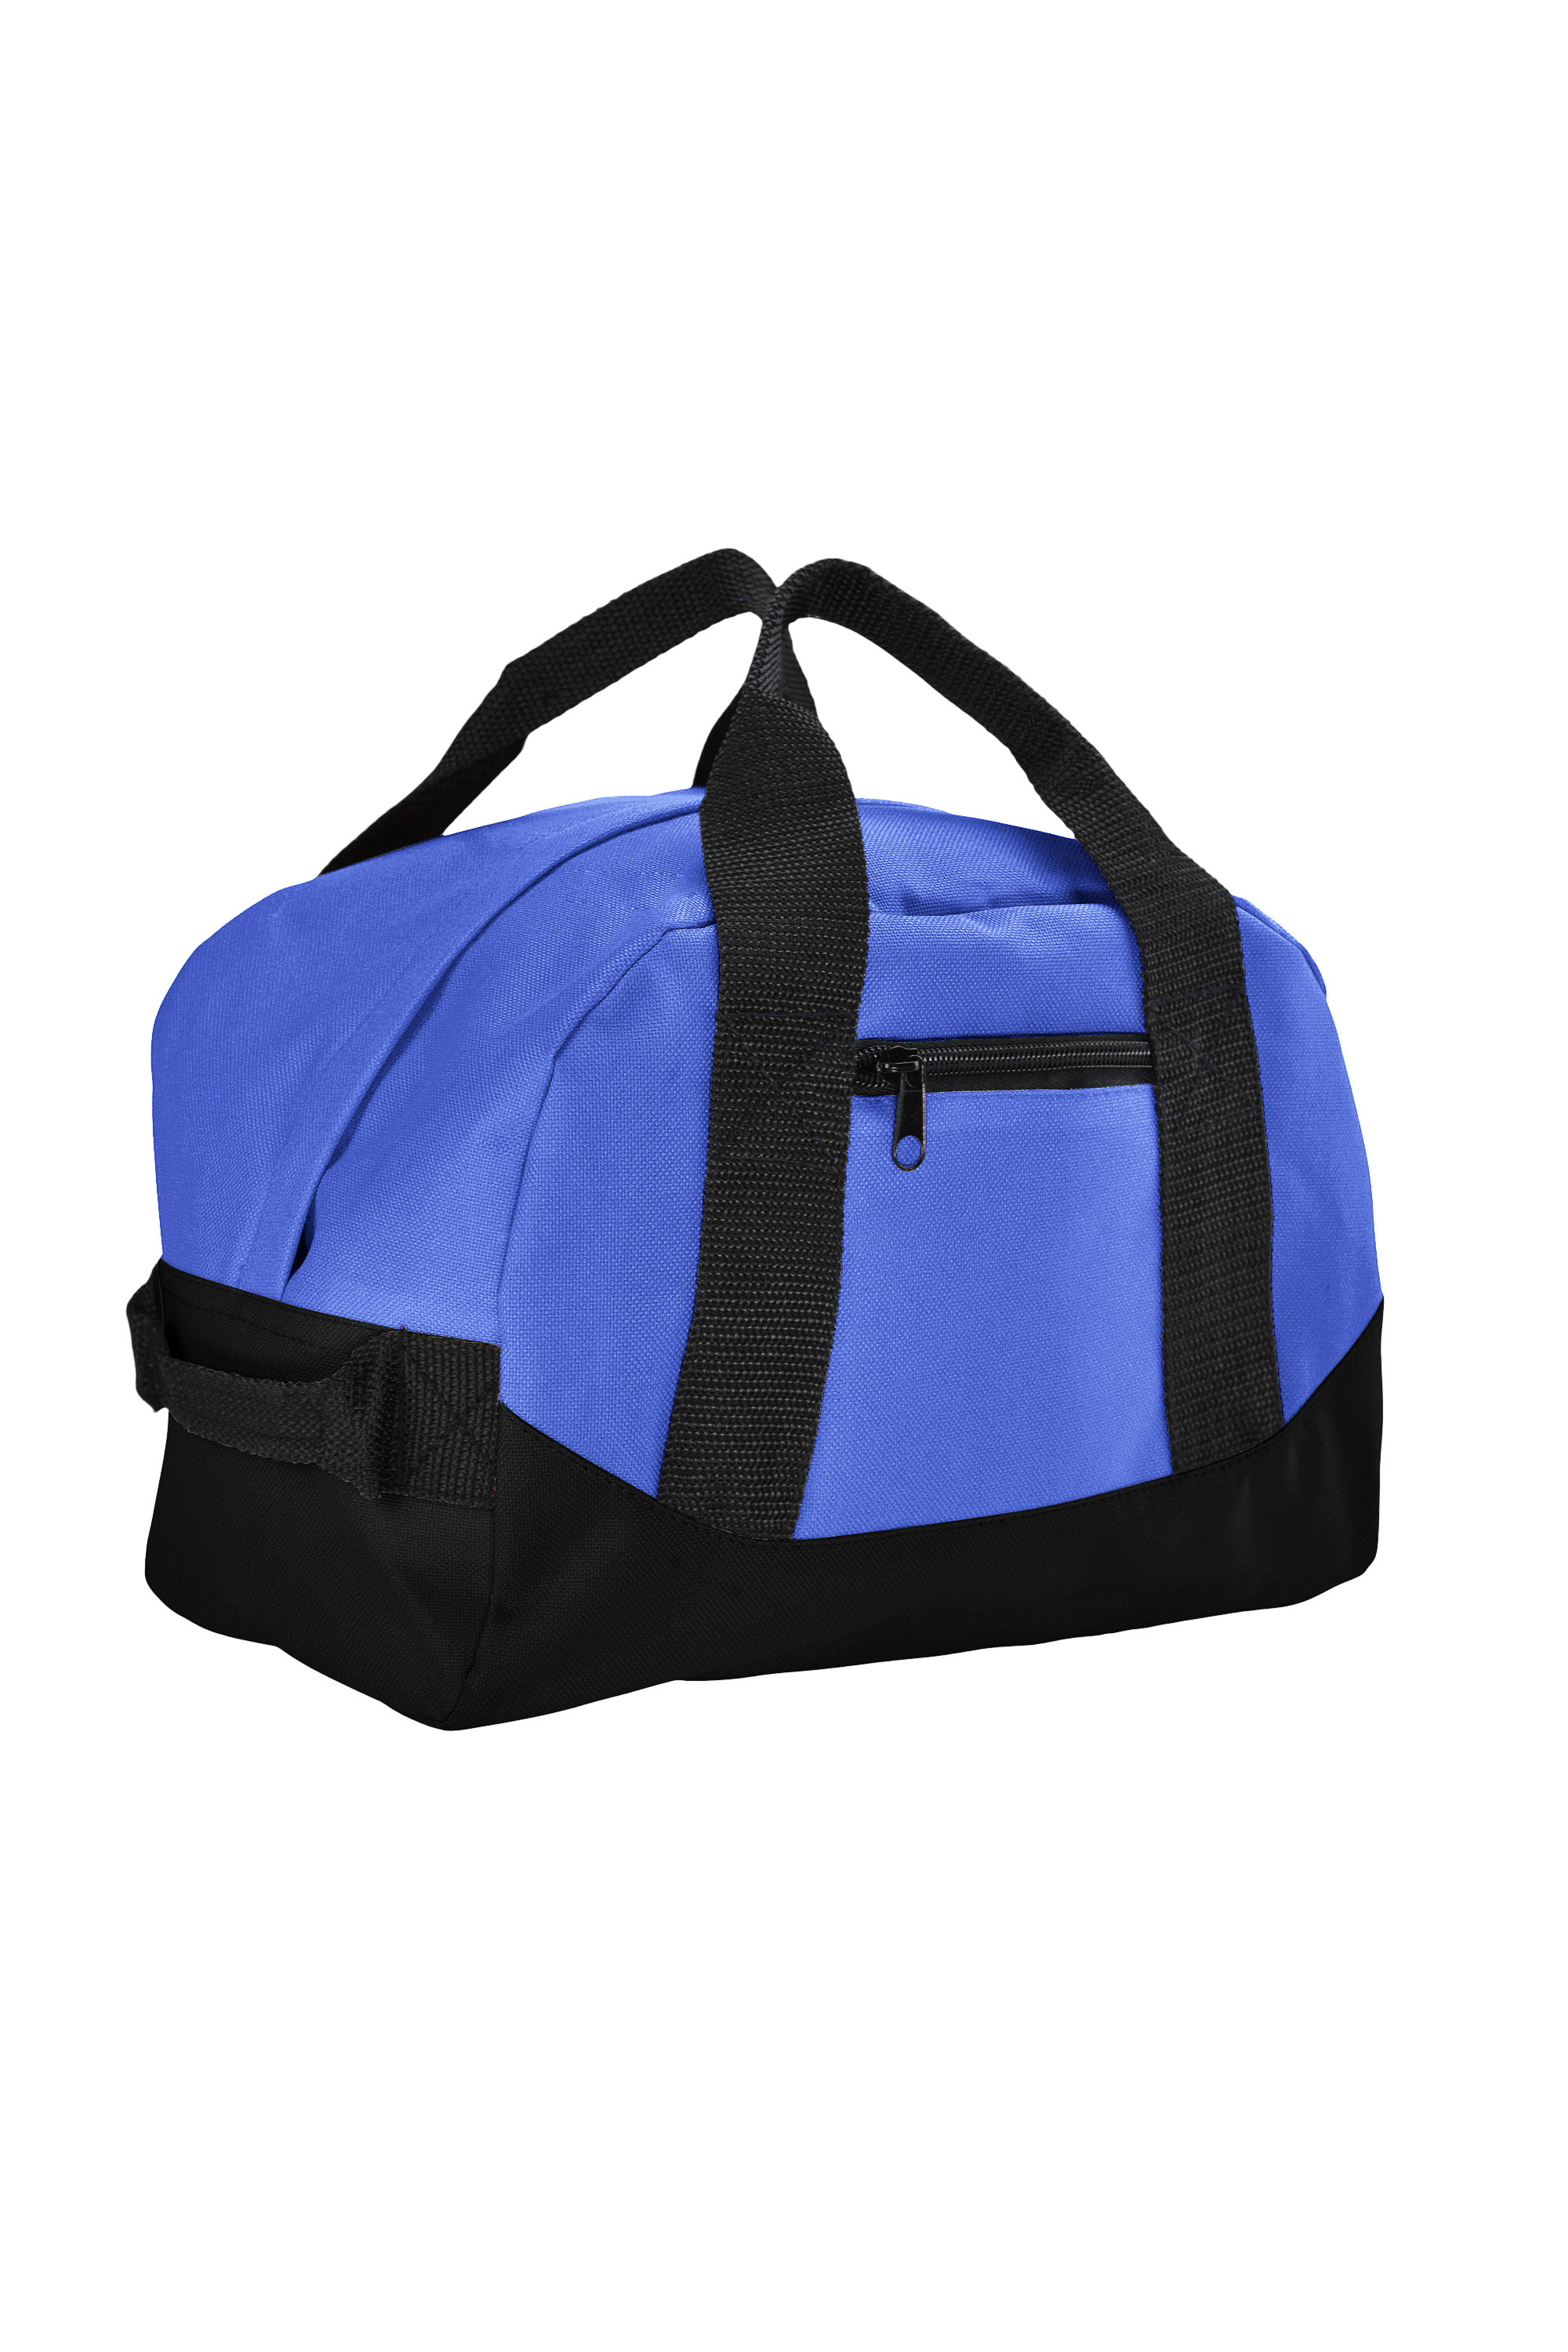 DALIX 12" Mini Duffel Bag Gym Duffle in Royal Blue - image 1 of 3